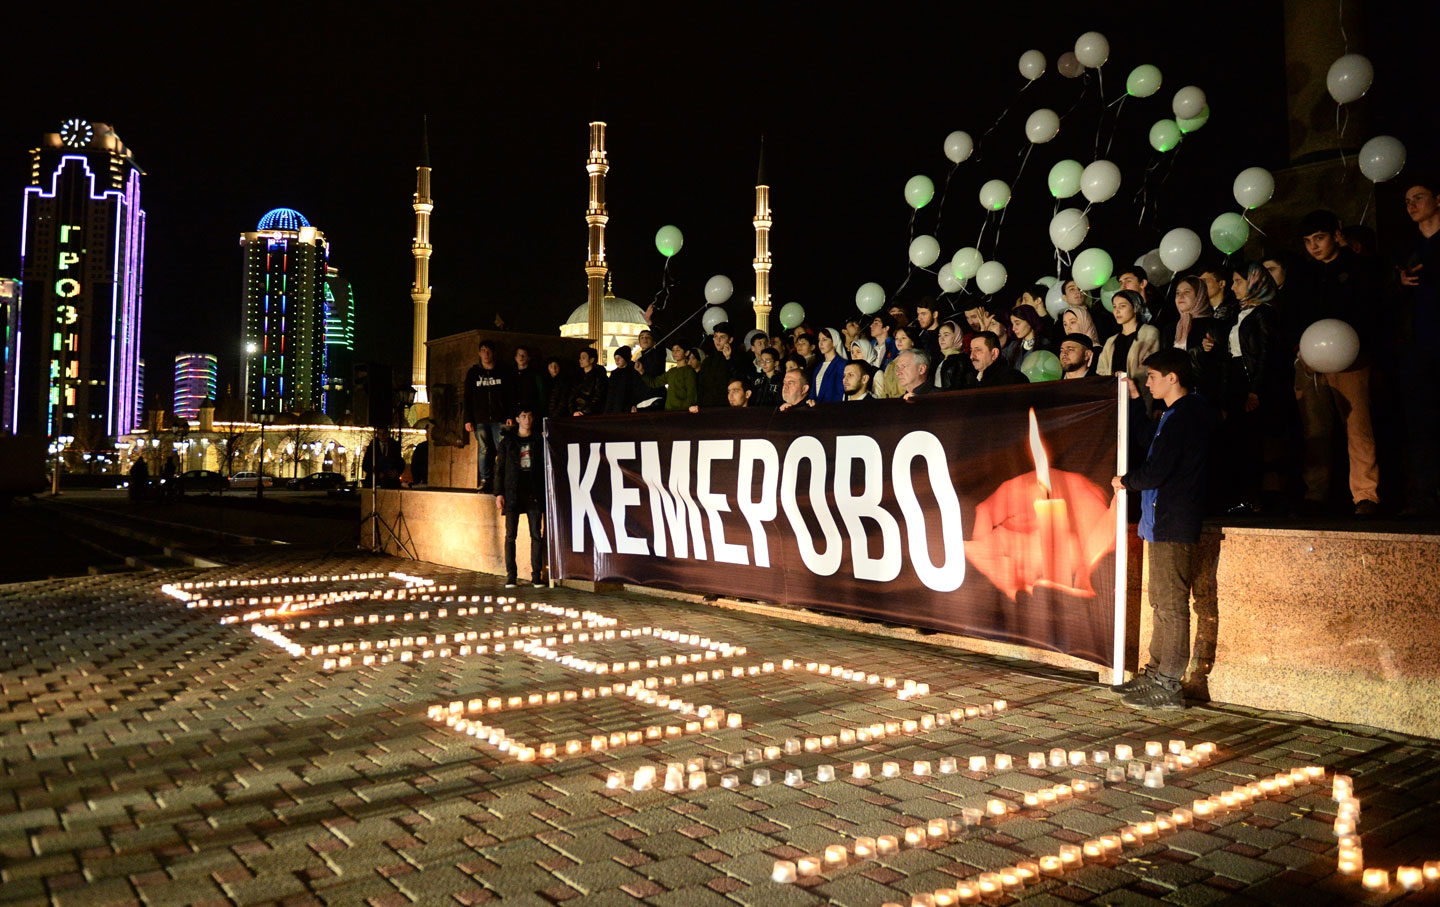 Event in Grozny in memory of those killed in the Zimnyaya Vishnya shopping mall fire in Kemerovo